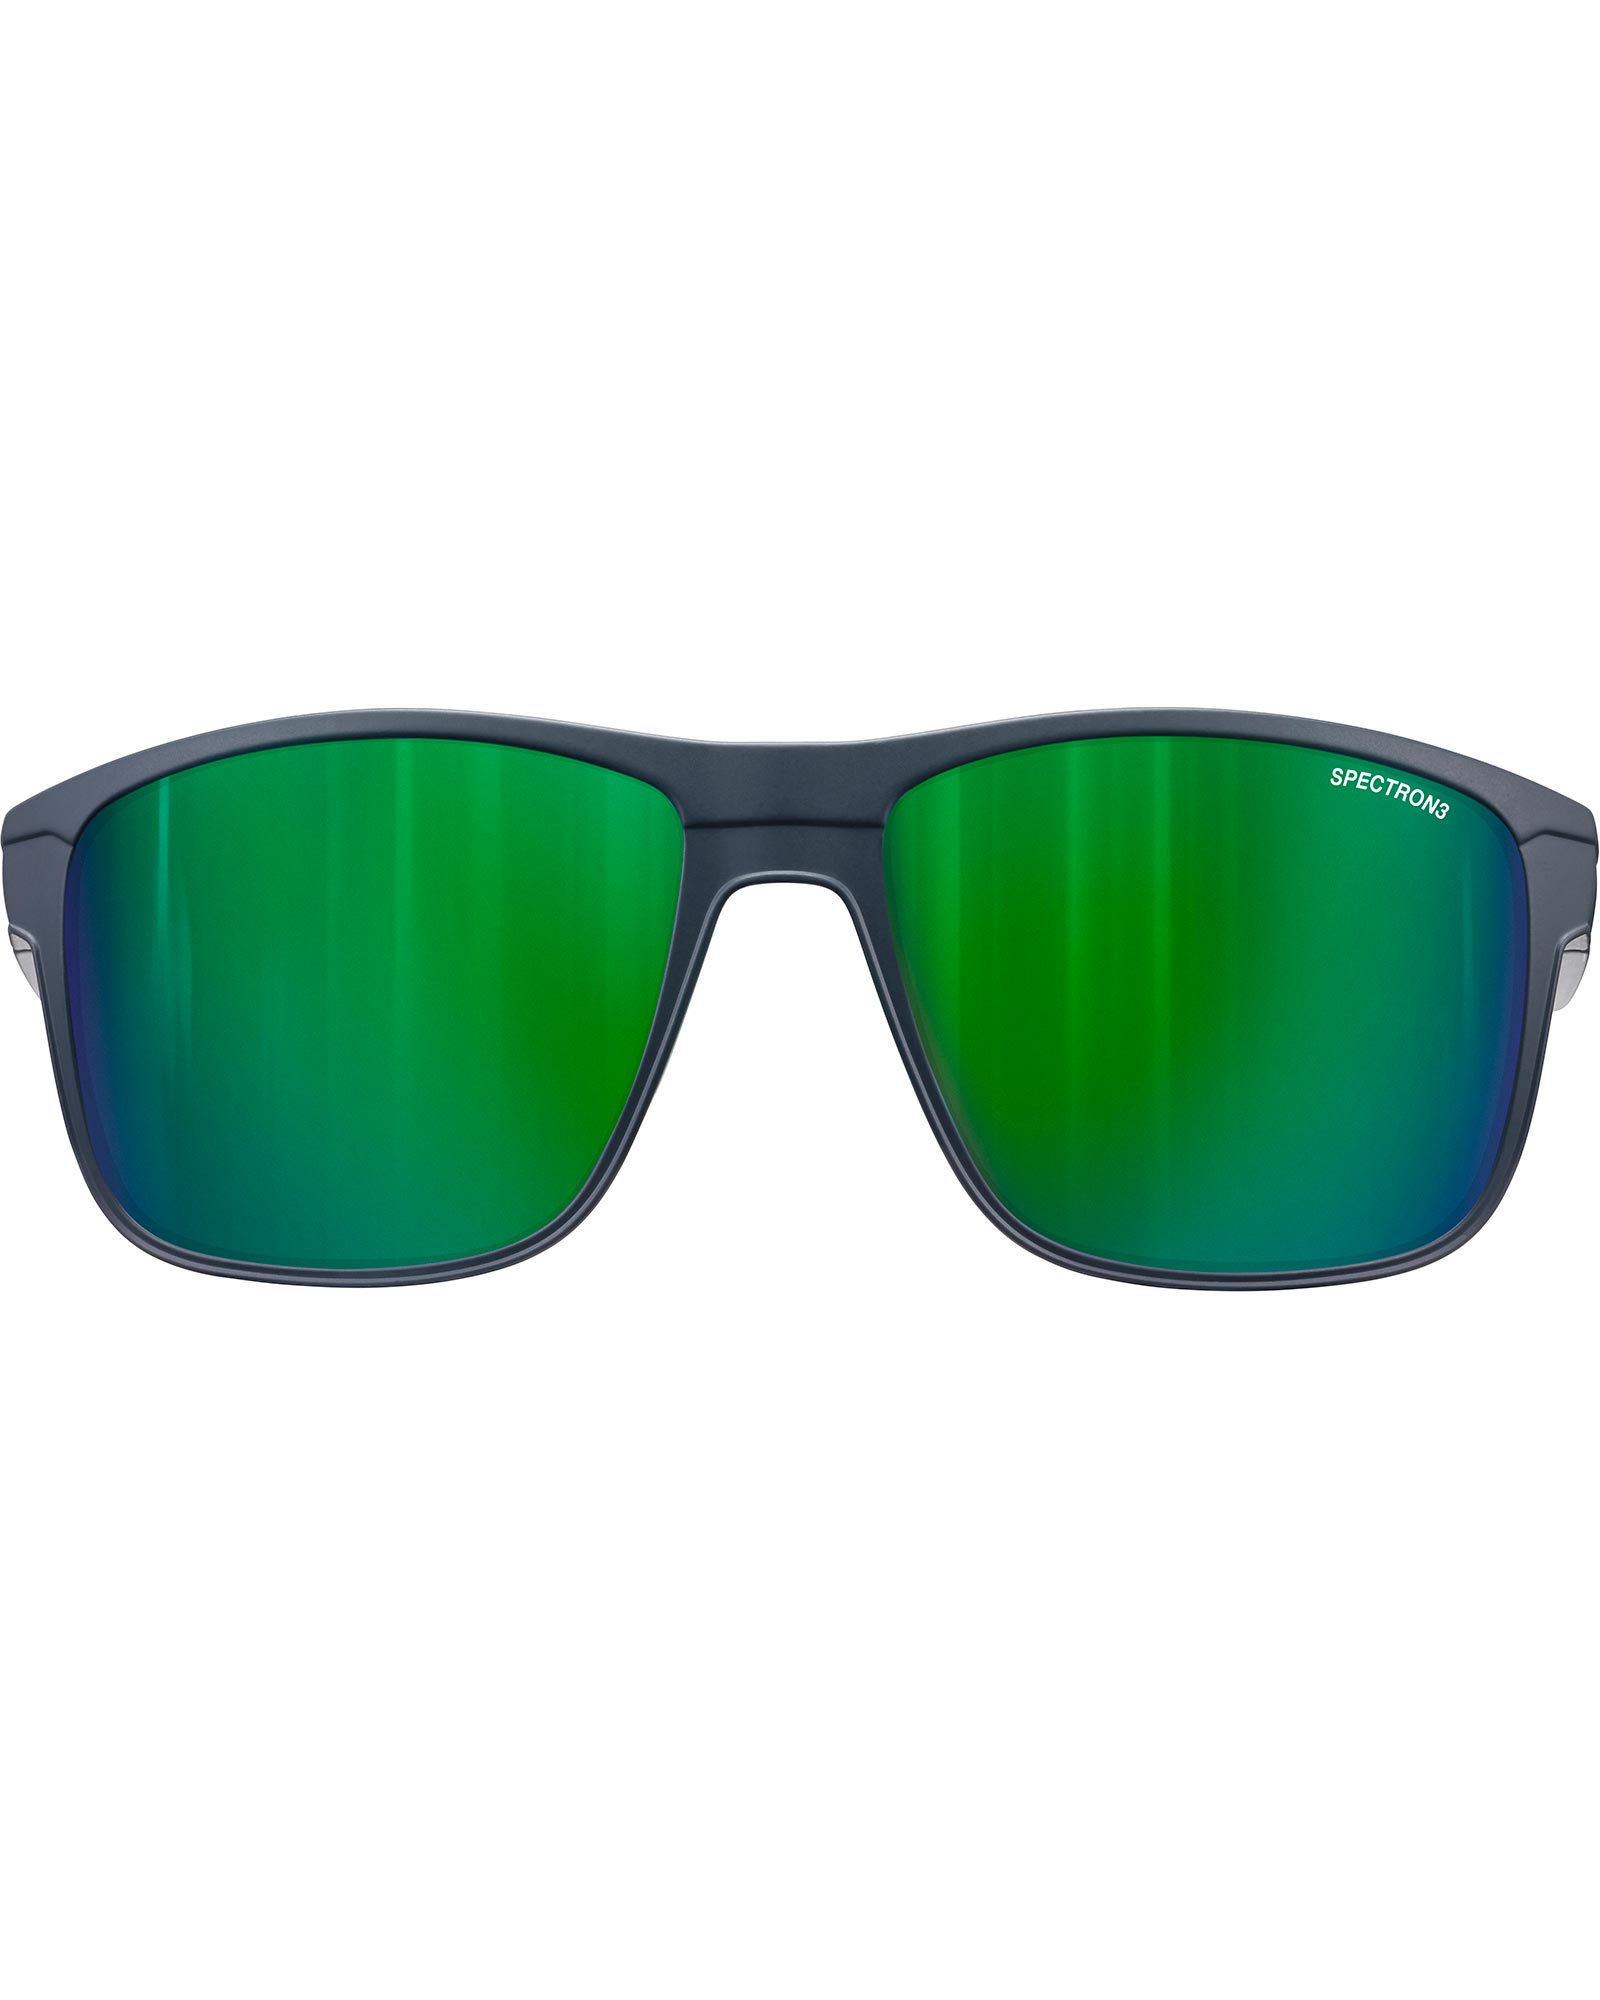 Julbo Renegade Spectron 3 Sunglasses - Matte Dark Blue/Green